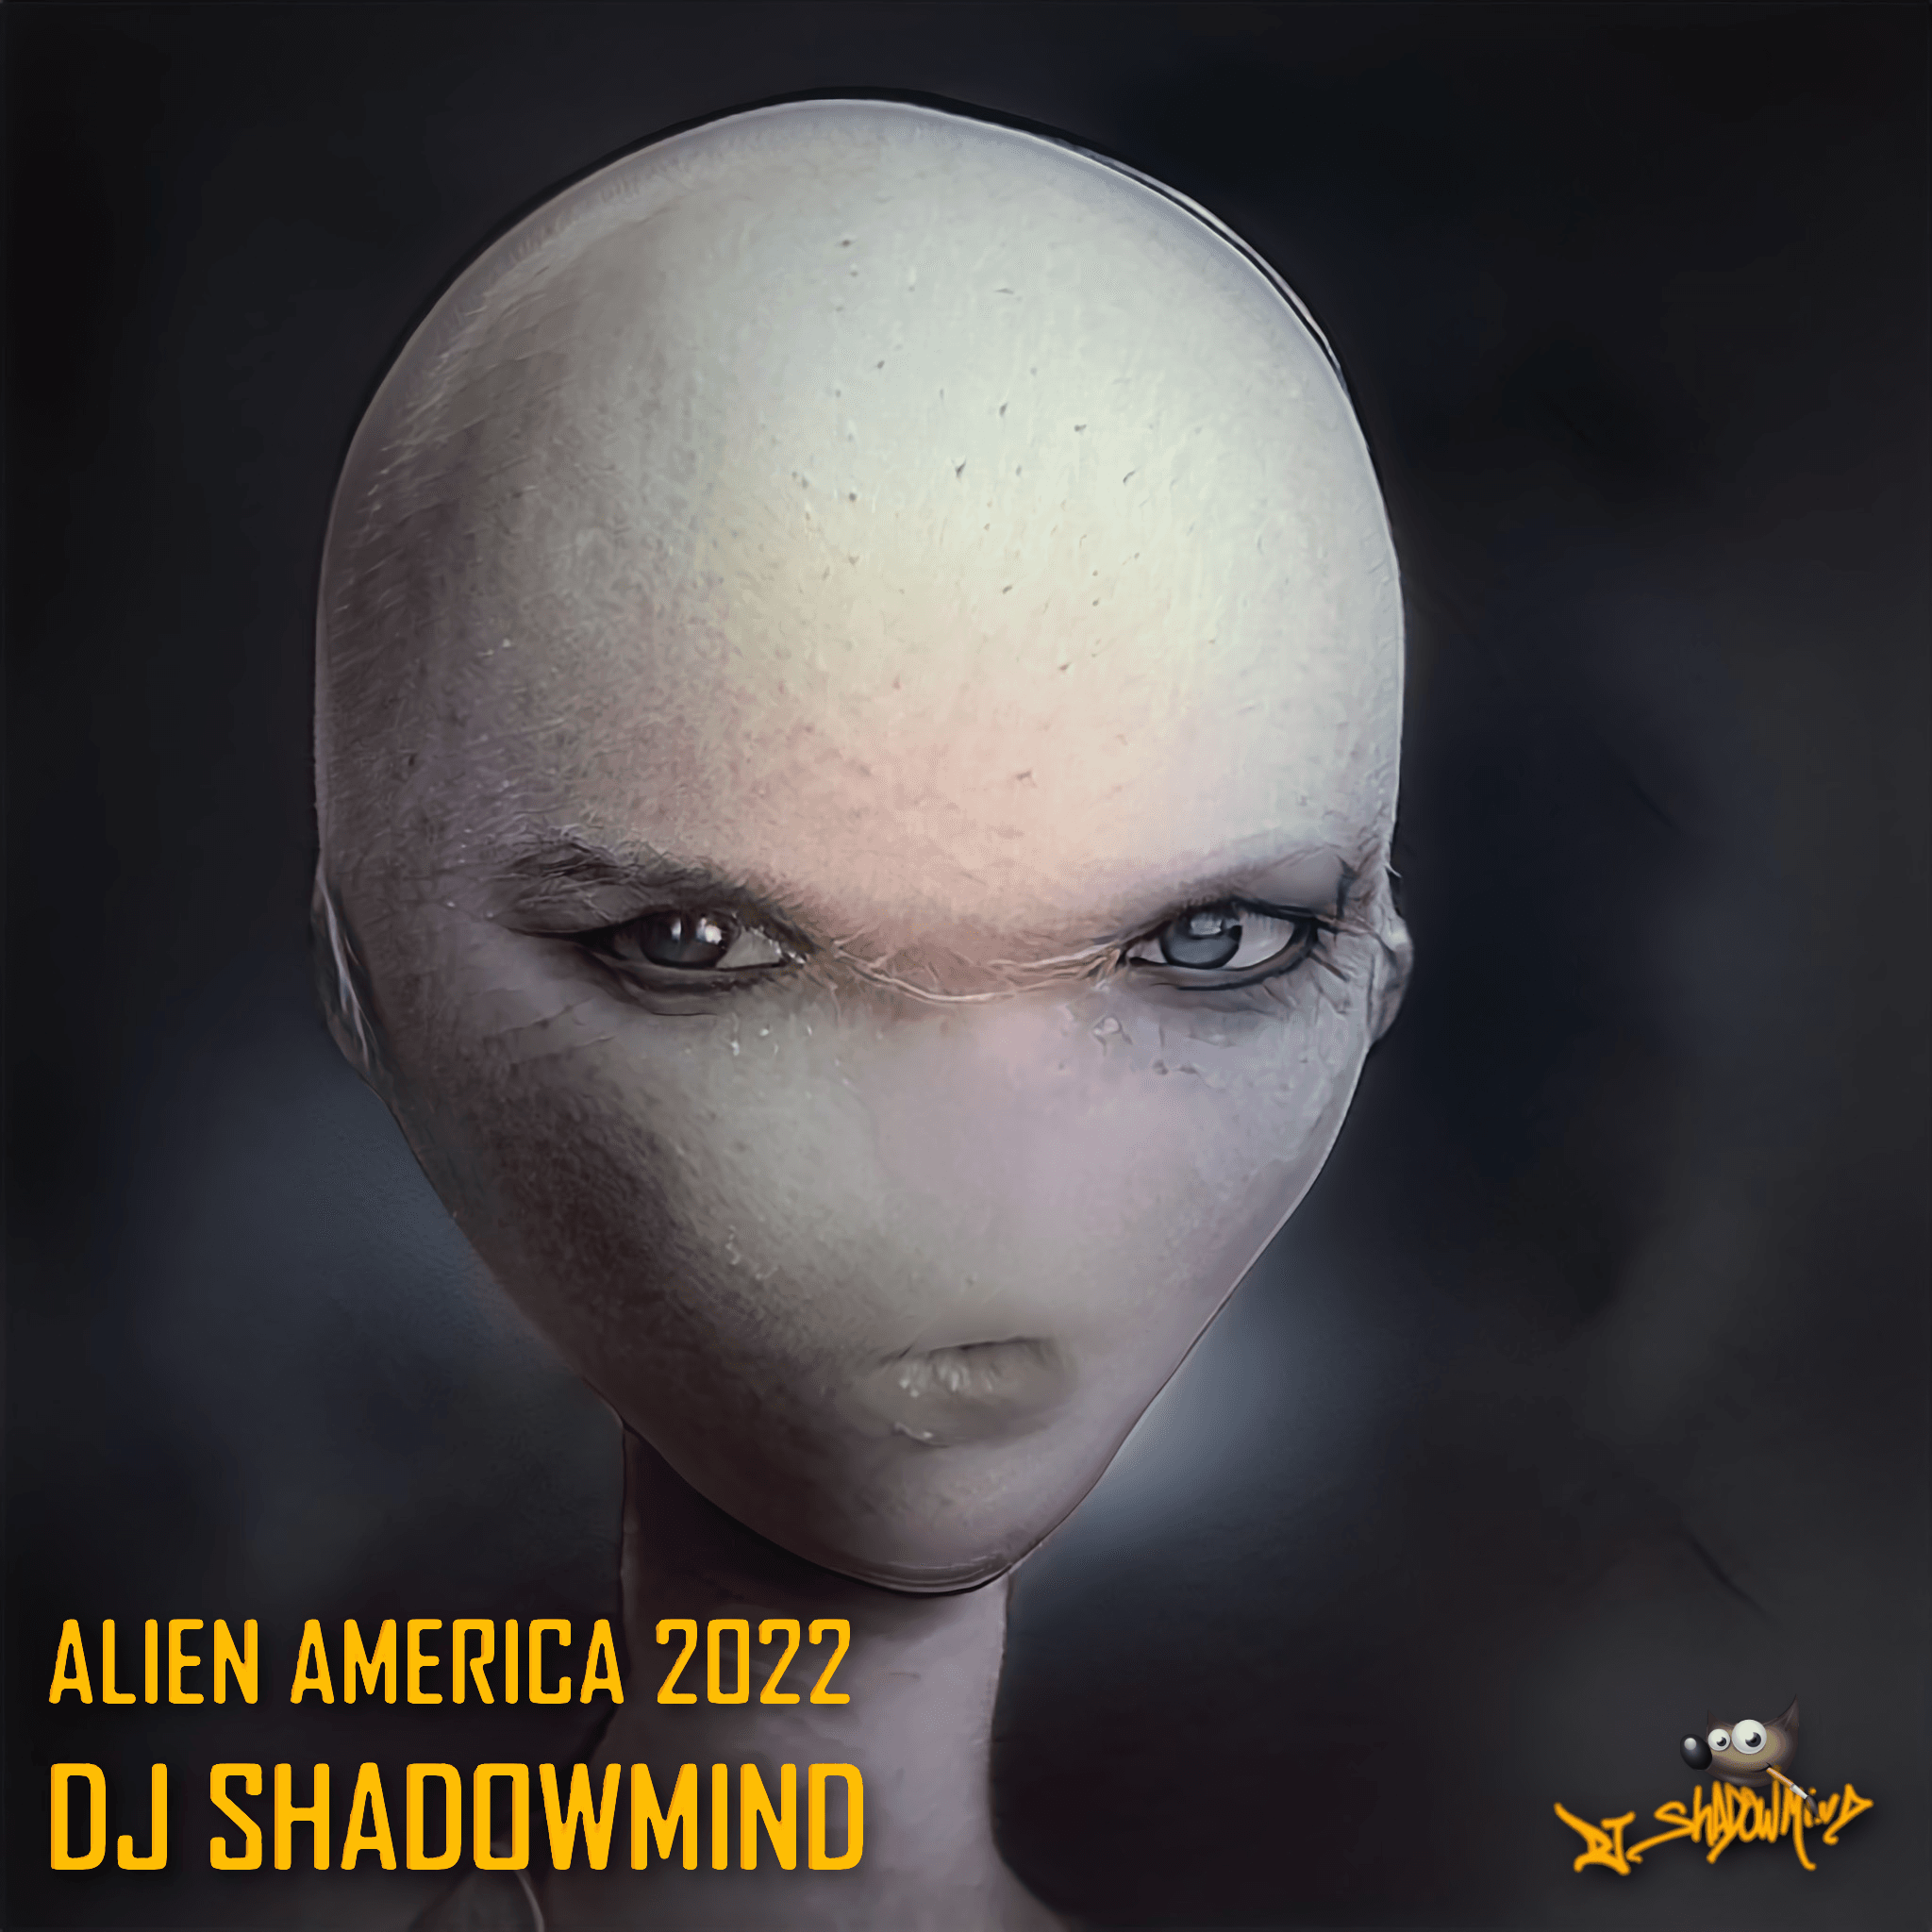 Alien America 2022 - Agent 002